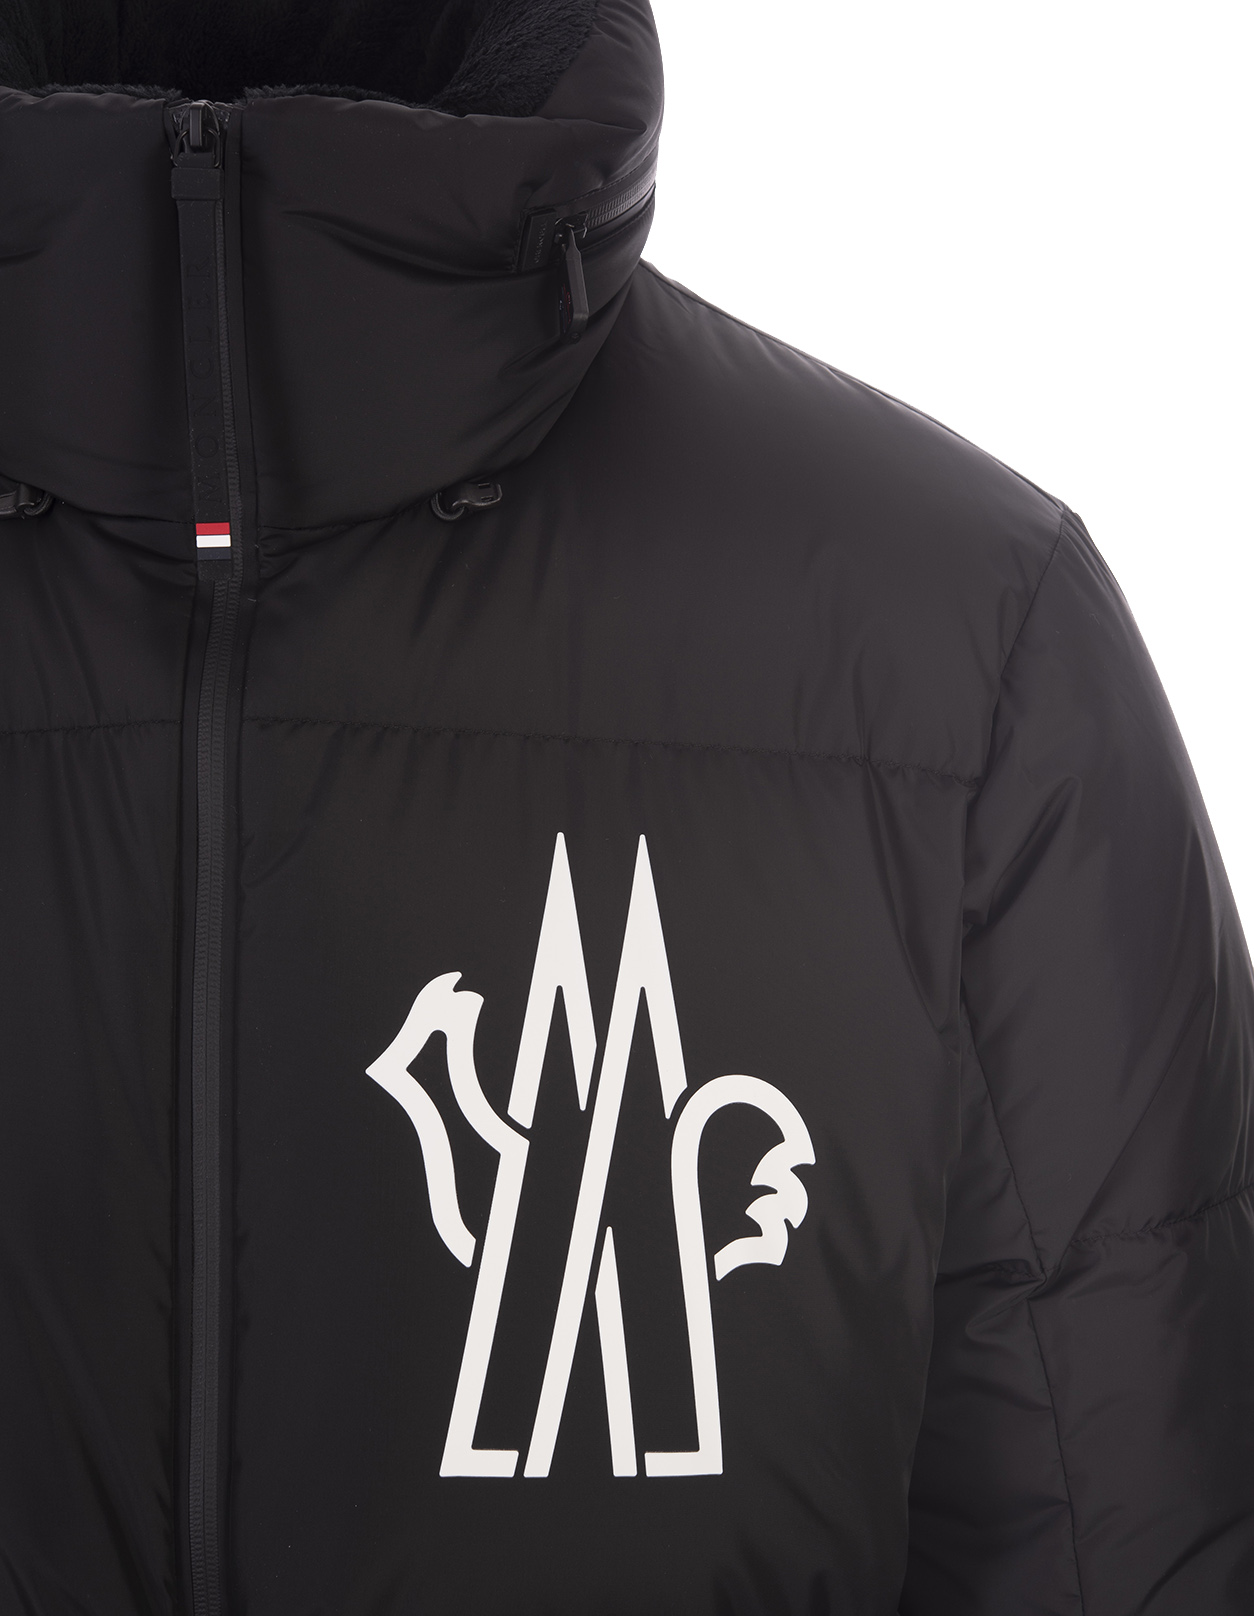 Moncler Grenoble Men's Logo-Print Down Ski Jacket